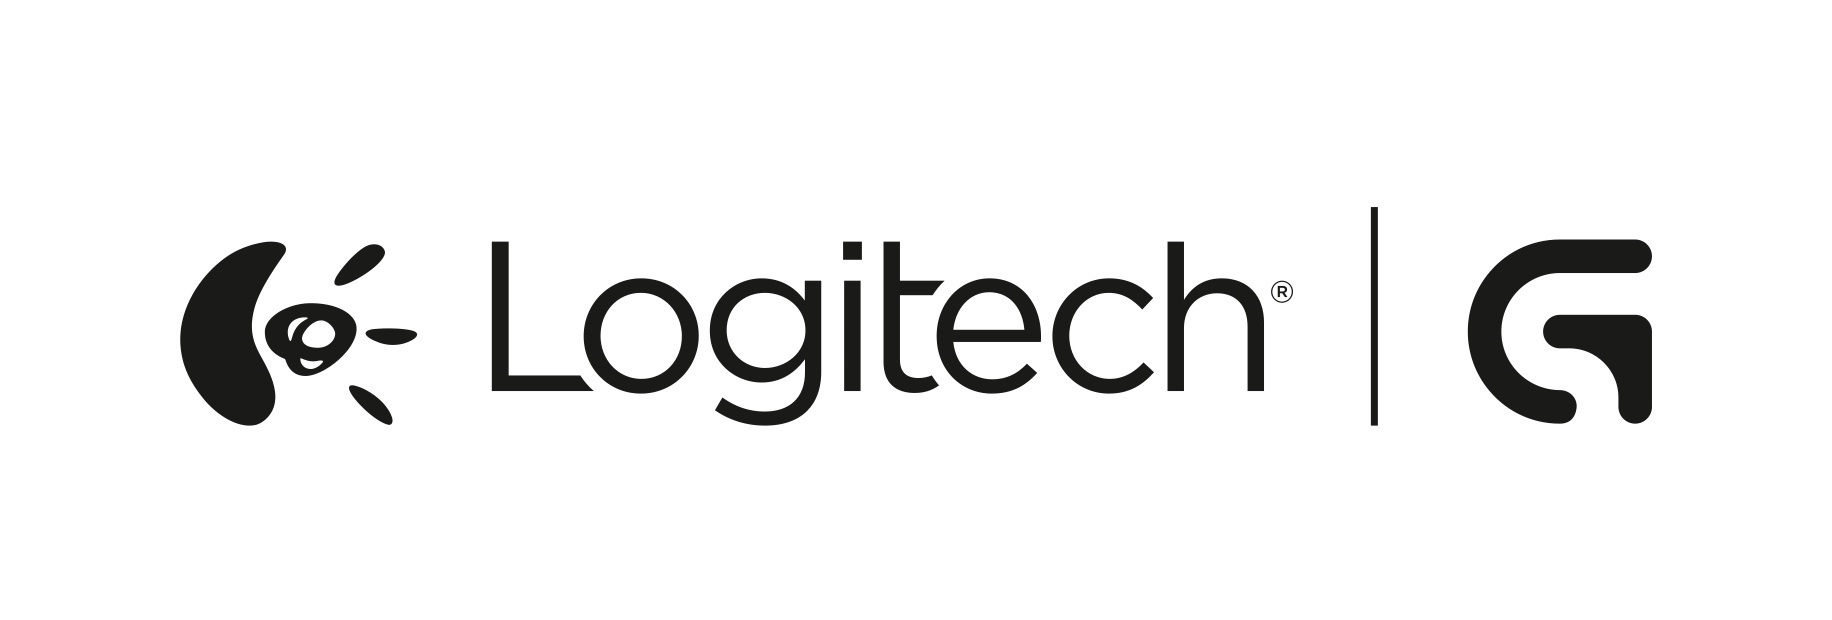 Logitech_G_black_logo